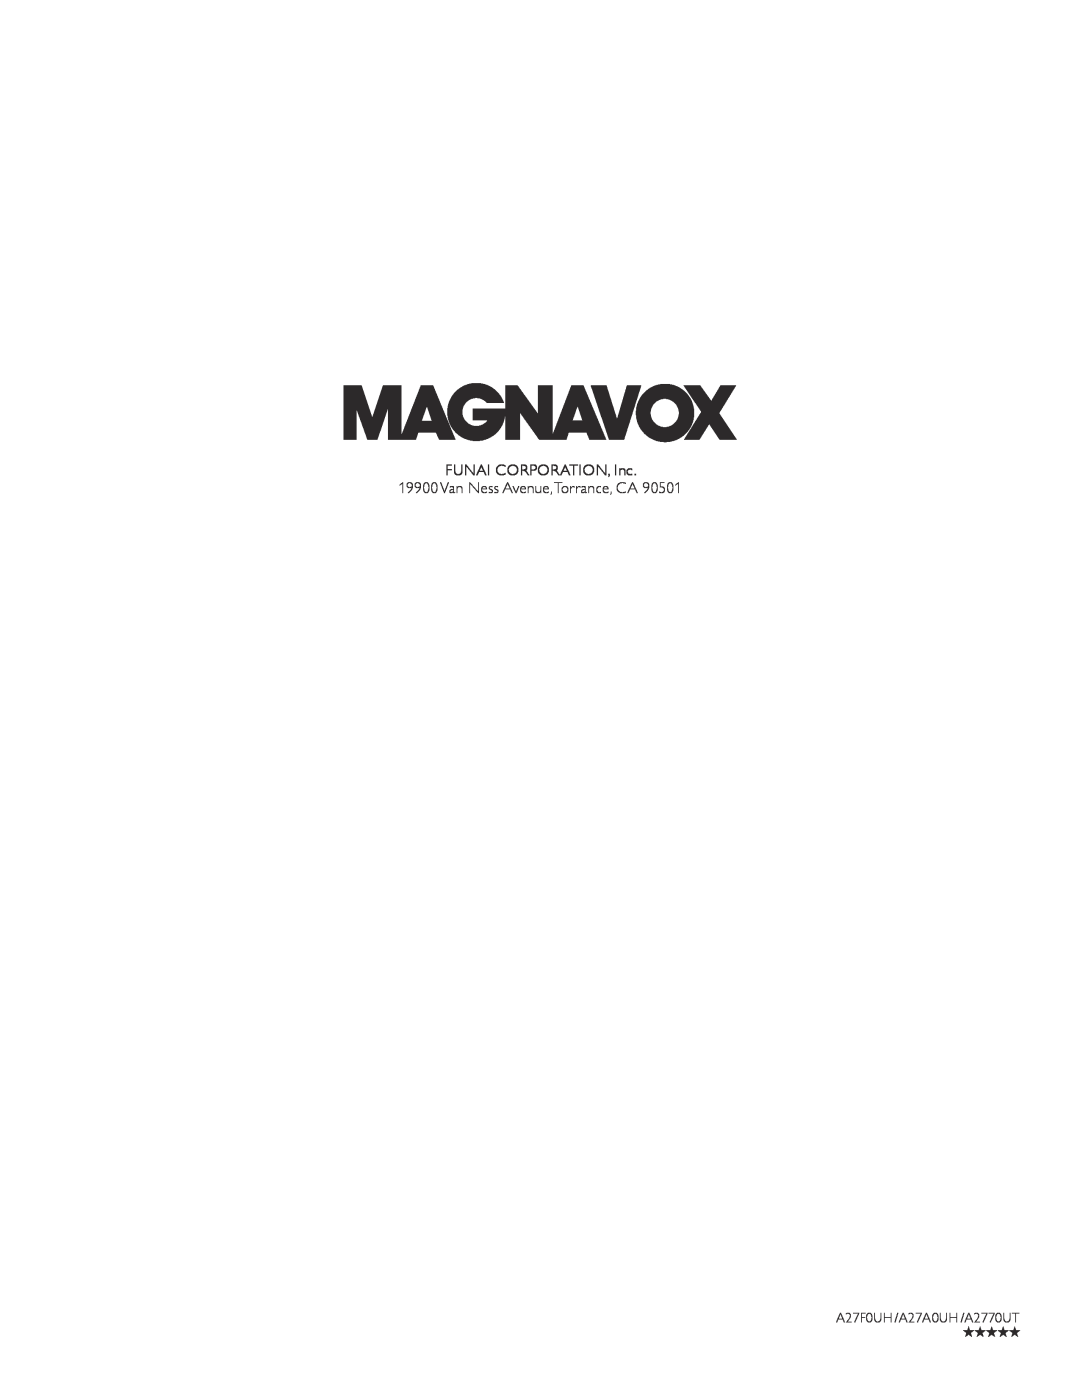 Magnavox 32MV402X, 26MV402X, 22MV402X FUNAI CORPORATION, Inc 19900 Van Ness Avenue,Torrance, CA, A27F0UH /A27A0UH /A2770UT 